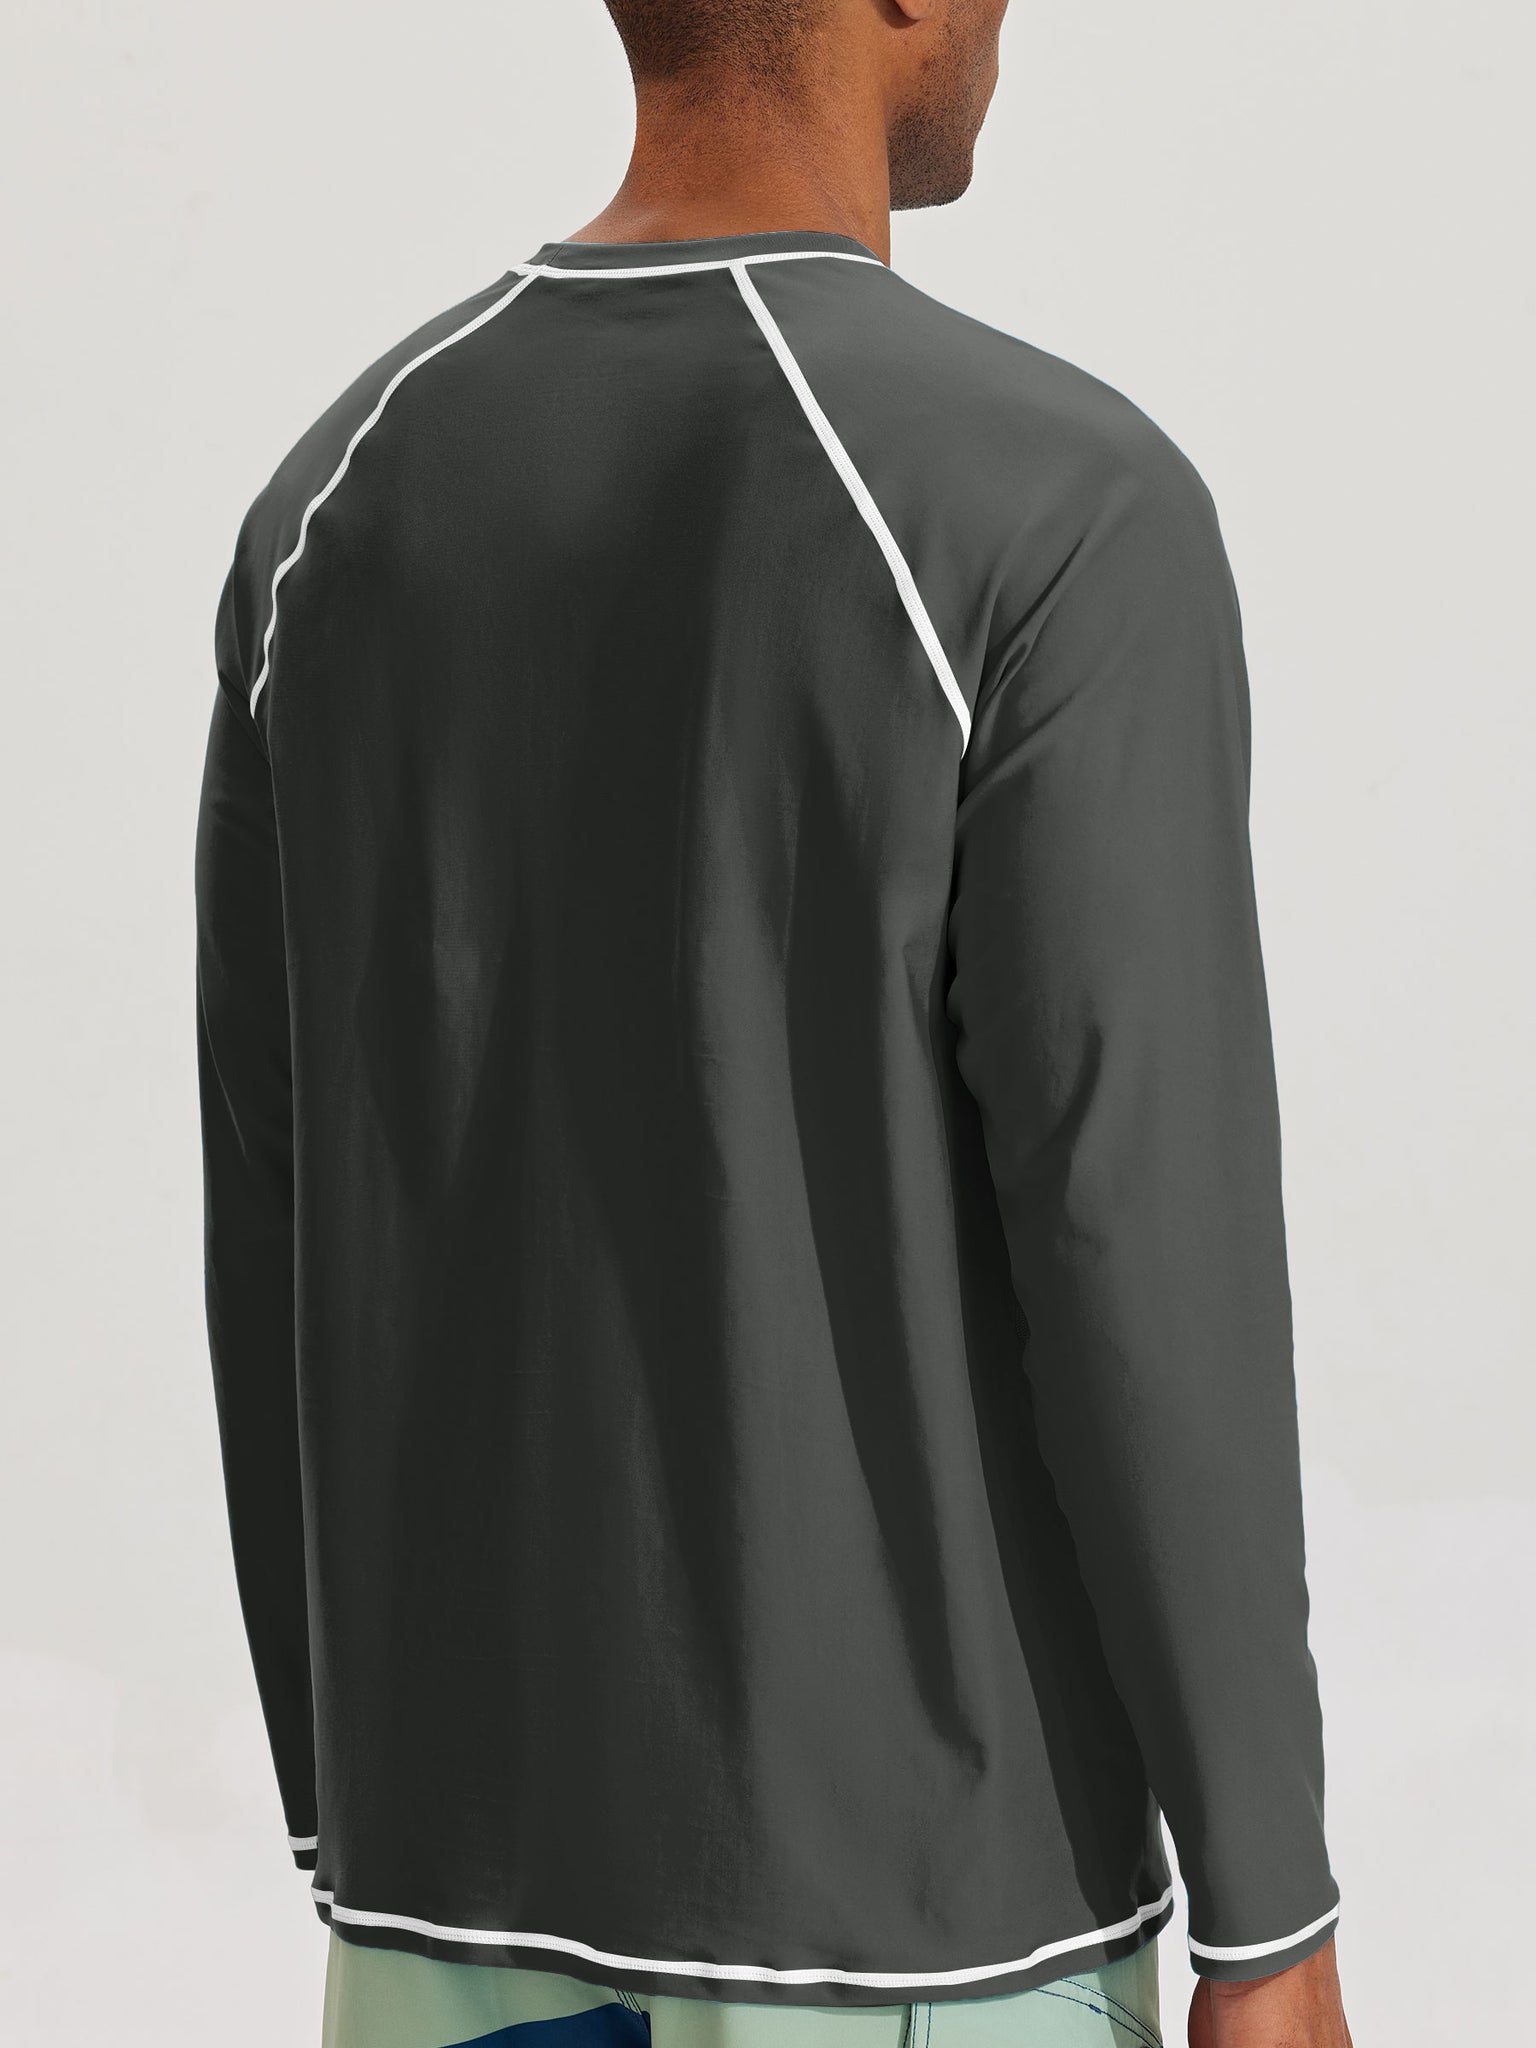 Men's Sun Protection Long Sleeve Shirt_DeepGray_model3